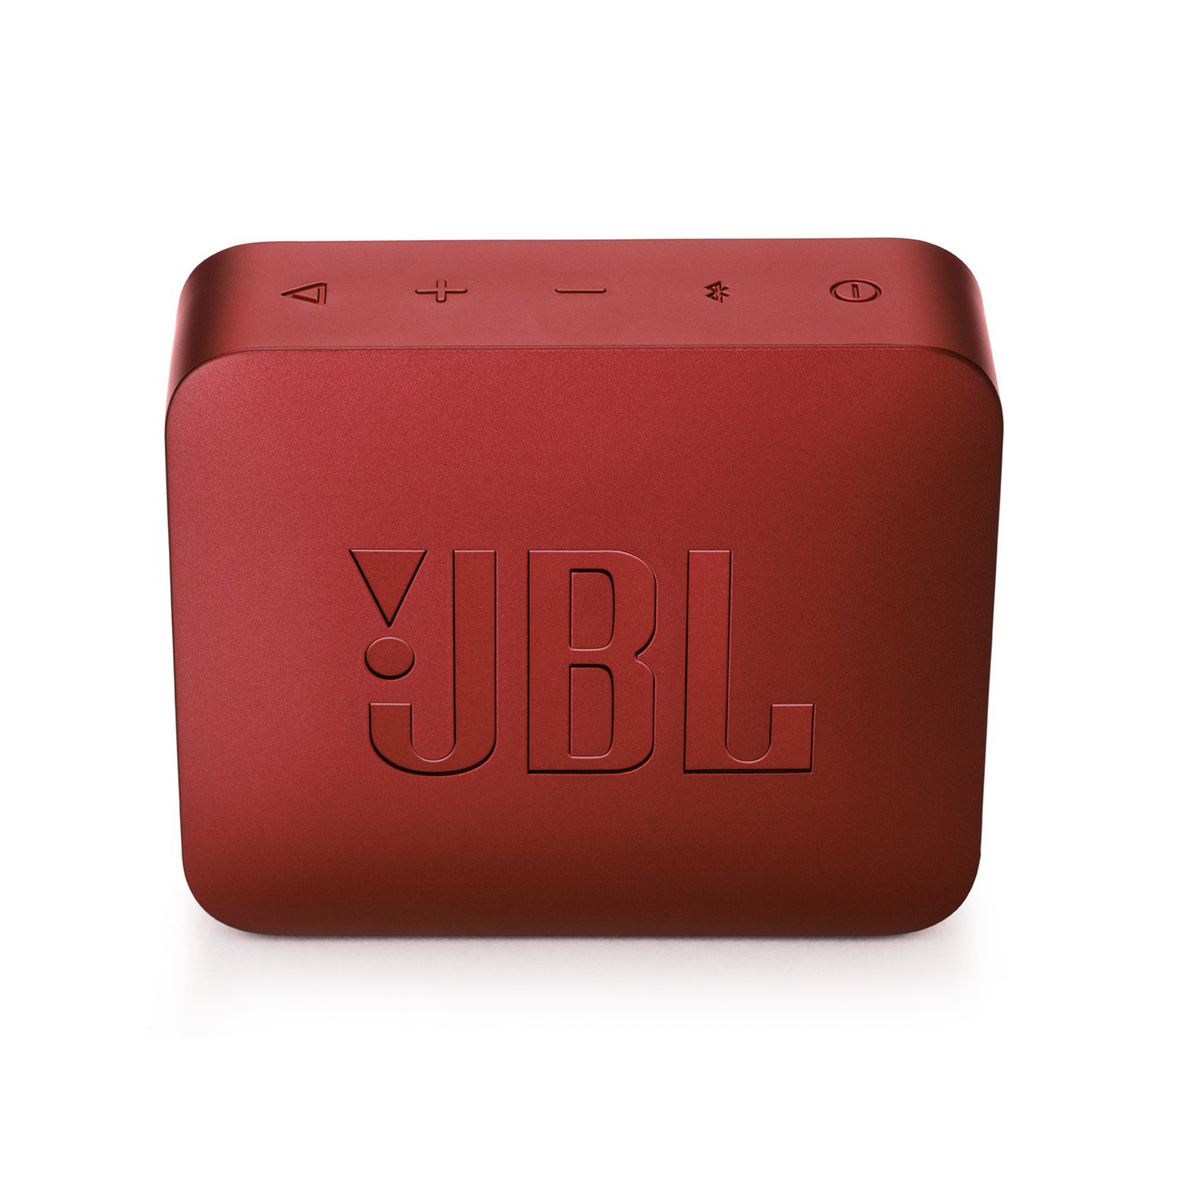 JBL Portable Bluetooth Speaker GO 2 Red